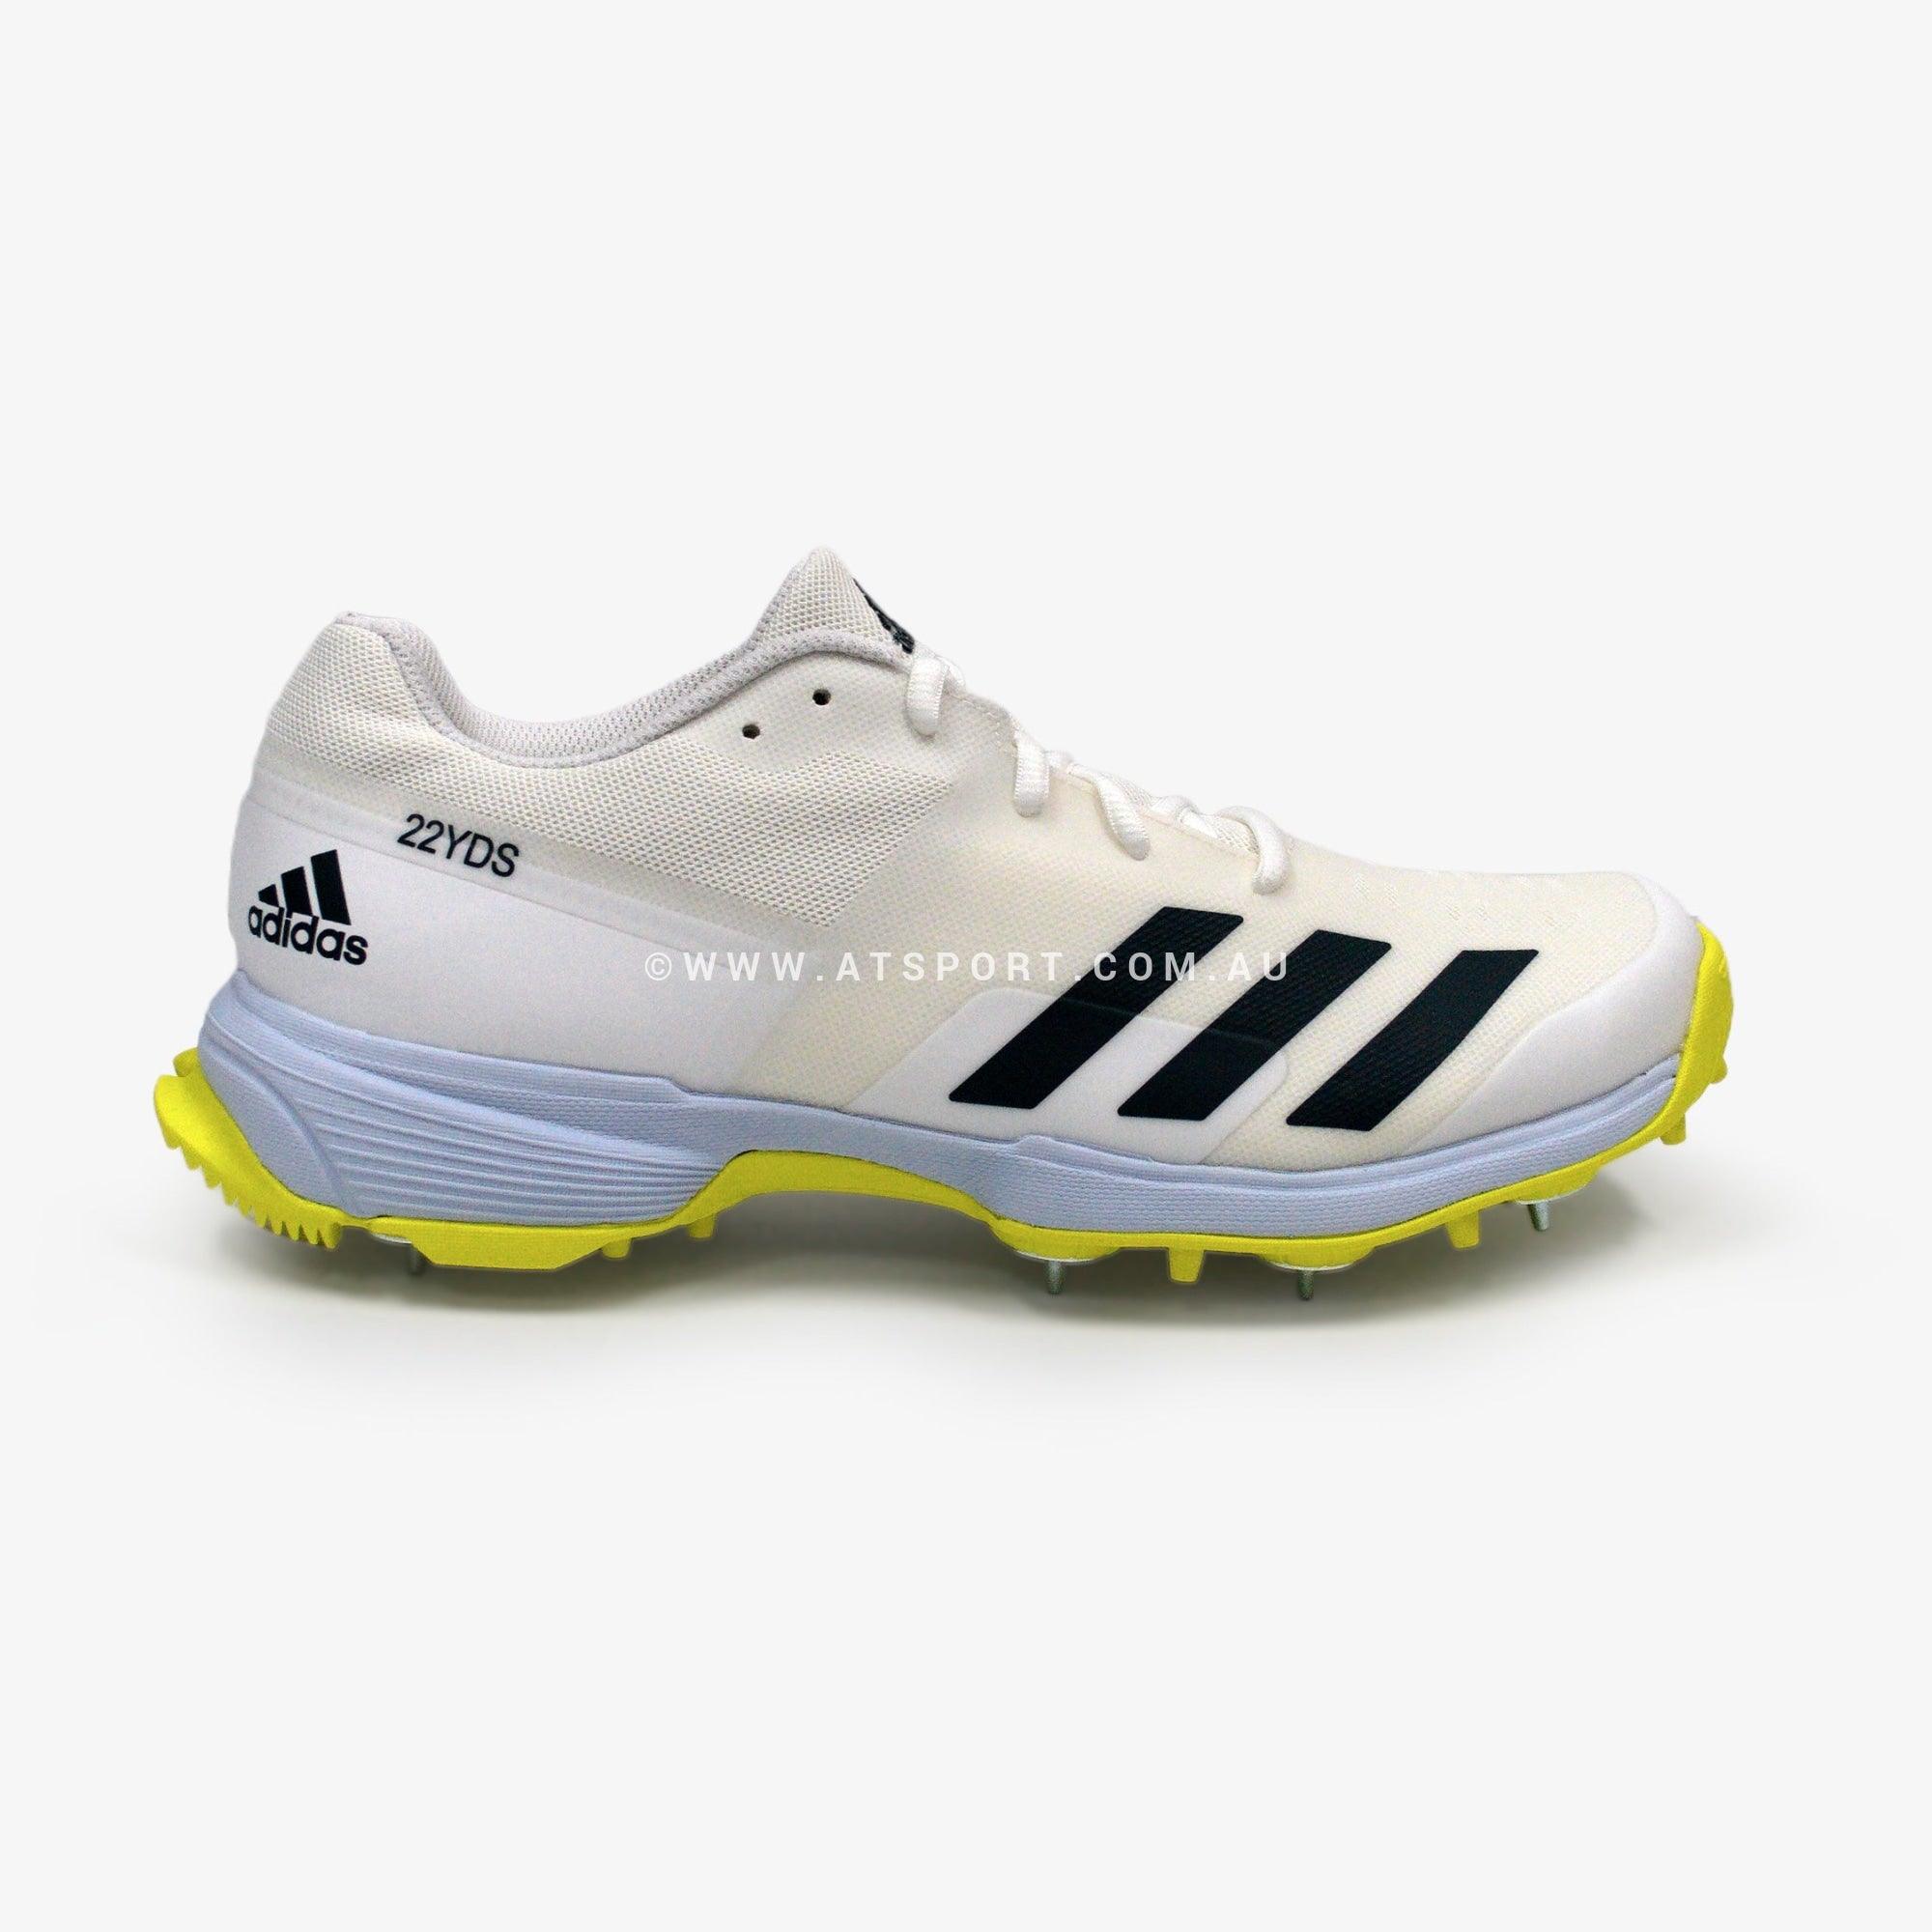 Adidas adizero 22YDS Spike Cricket Shoes - AT Sports